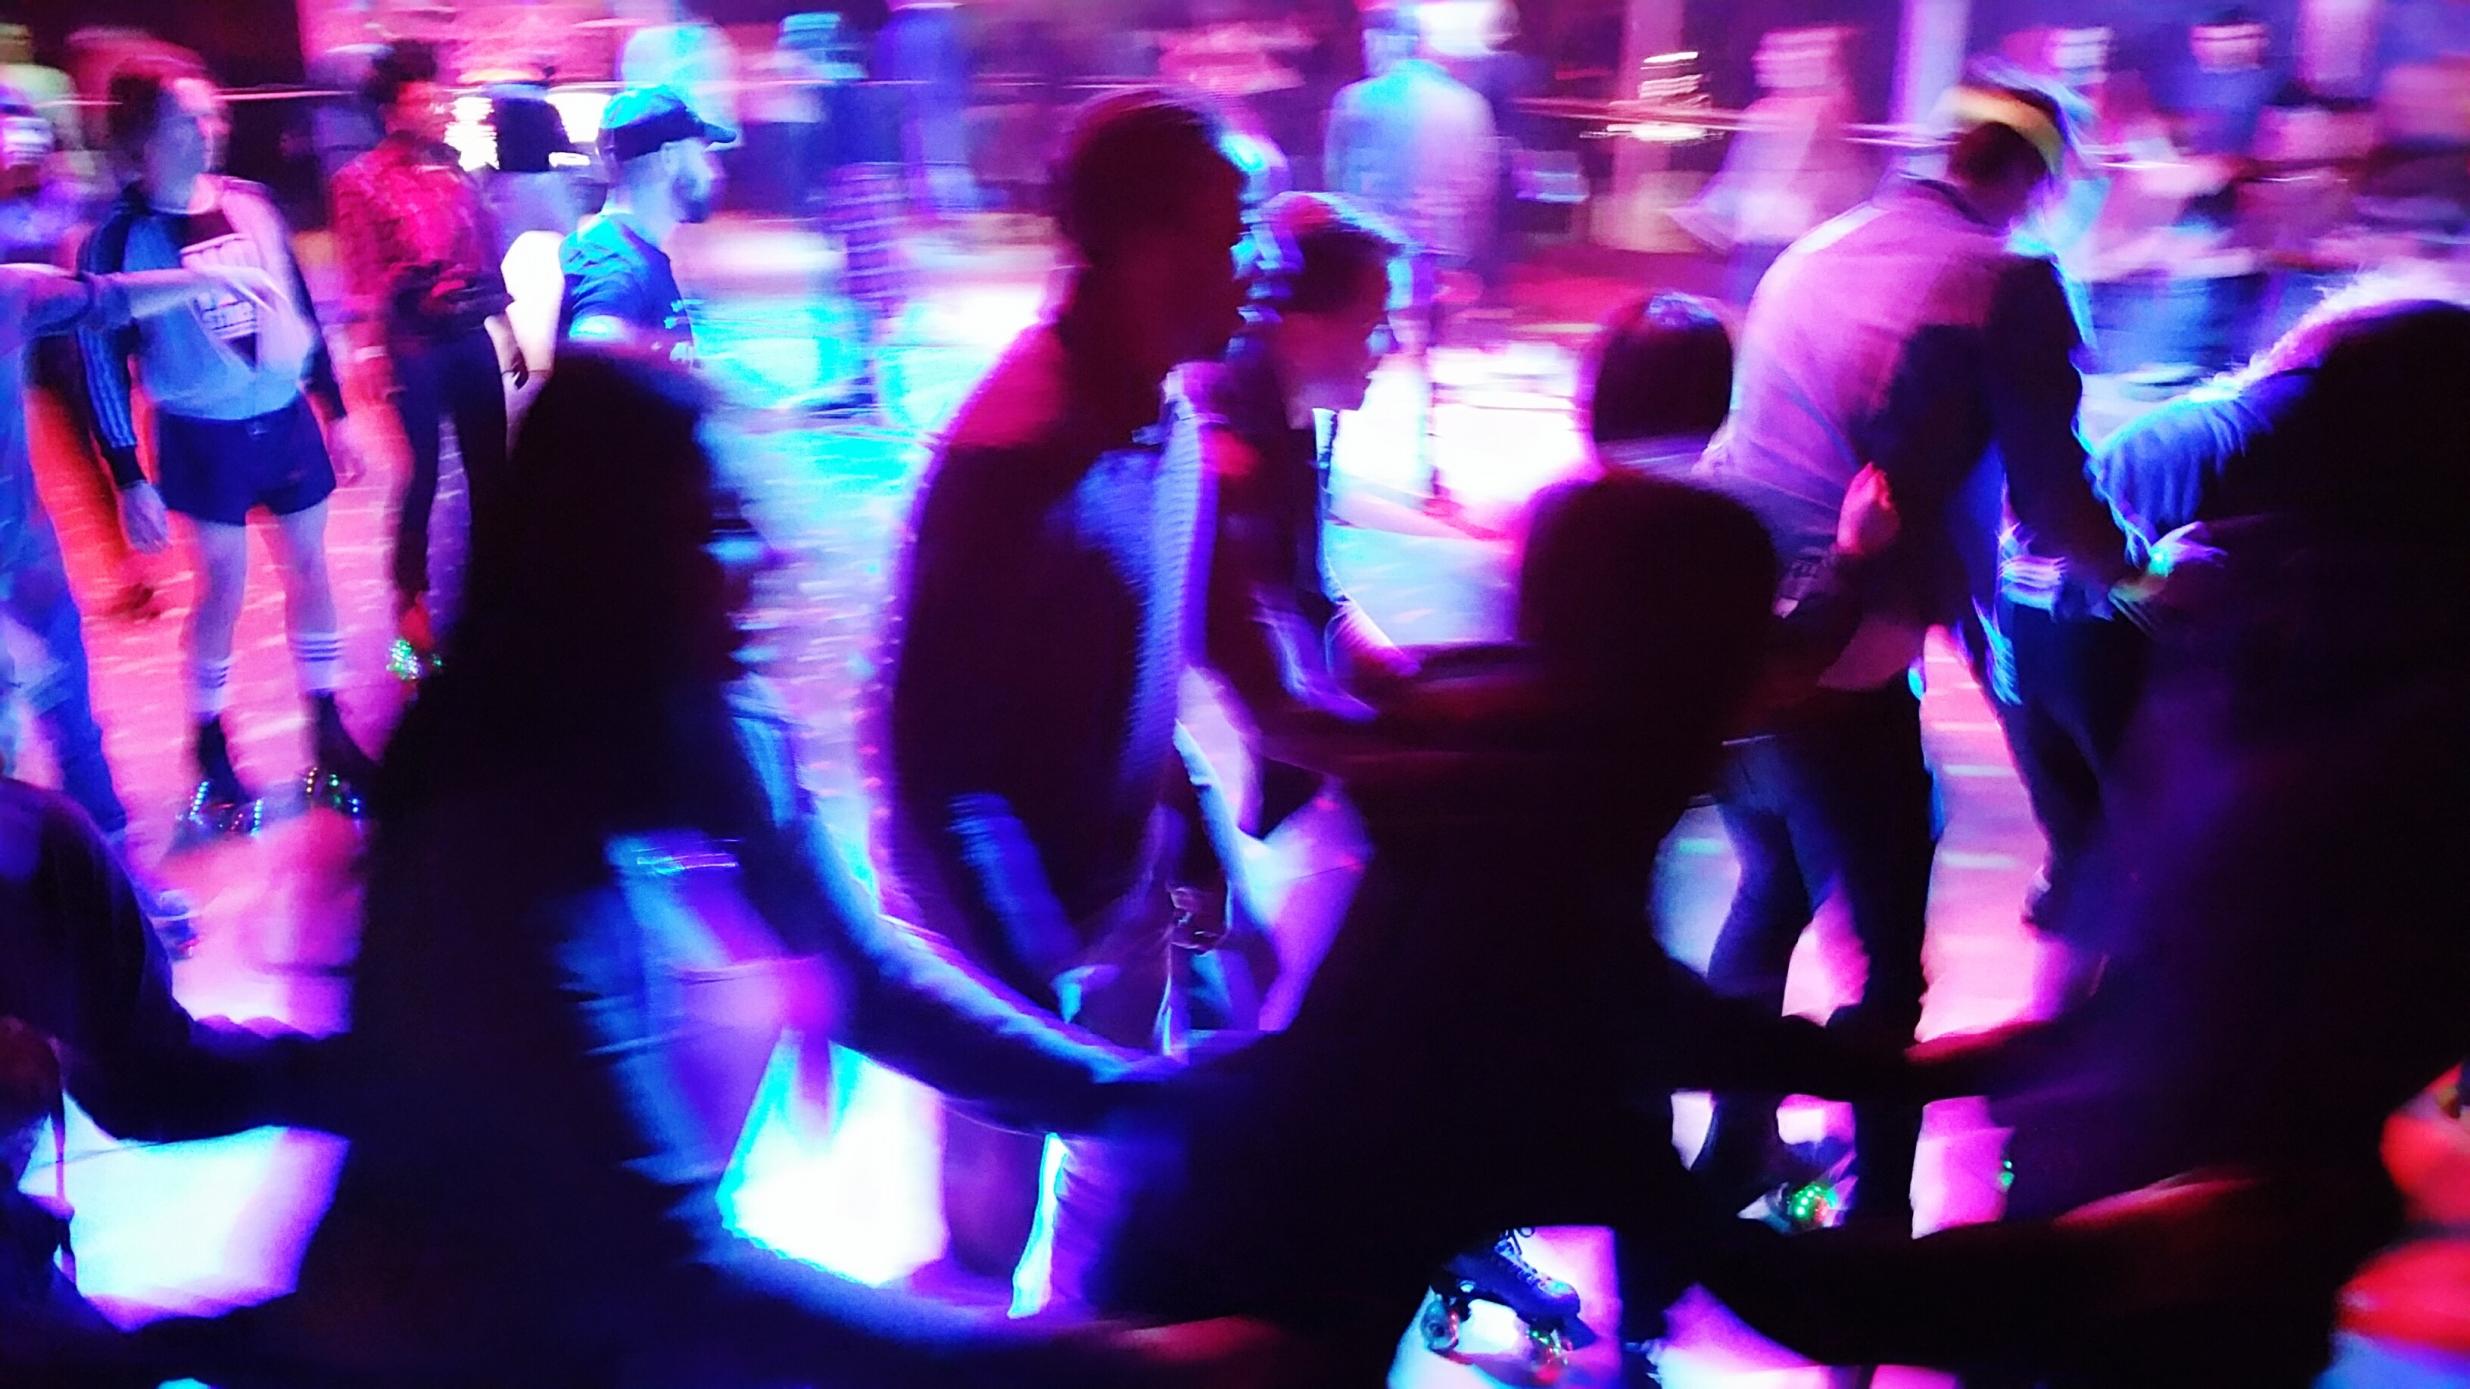 Blurred Motion Of People Enjoying At Roller Disco At Night